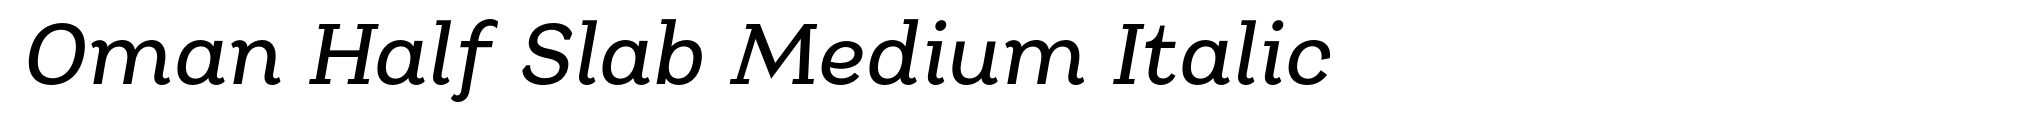 Oman Half Slab Medium Italic image